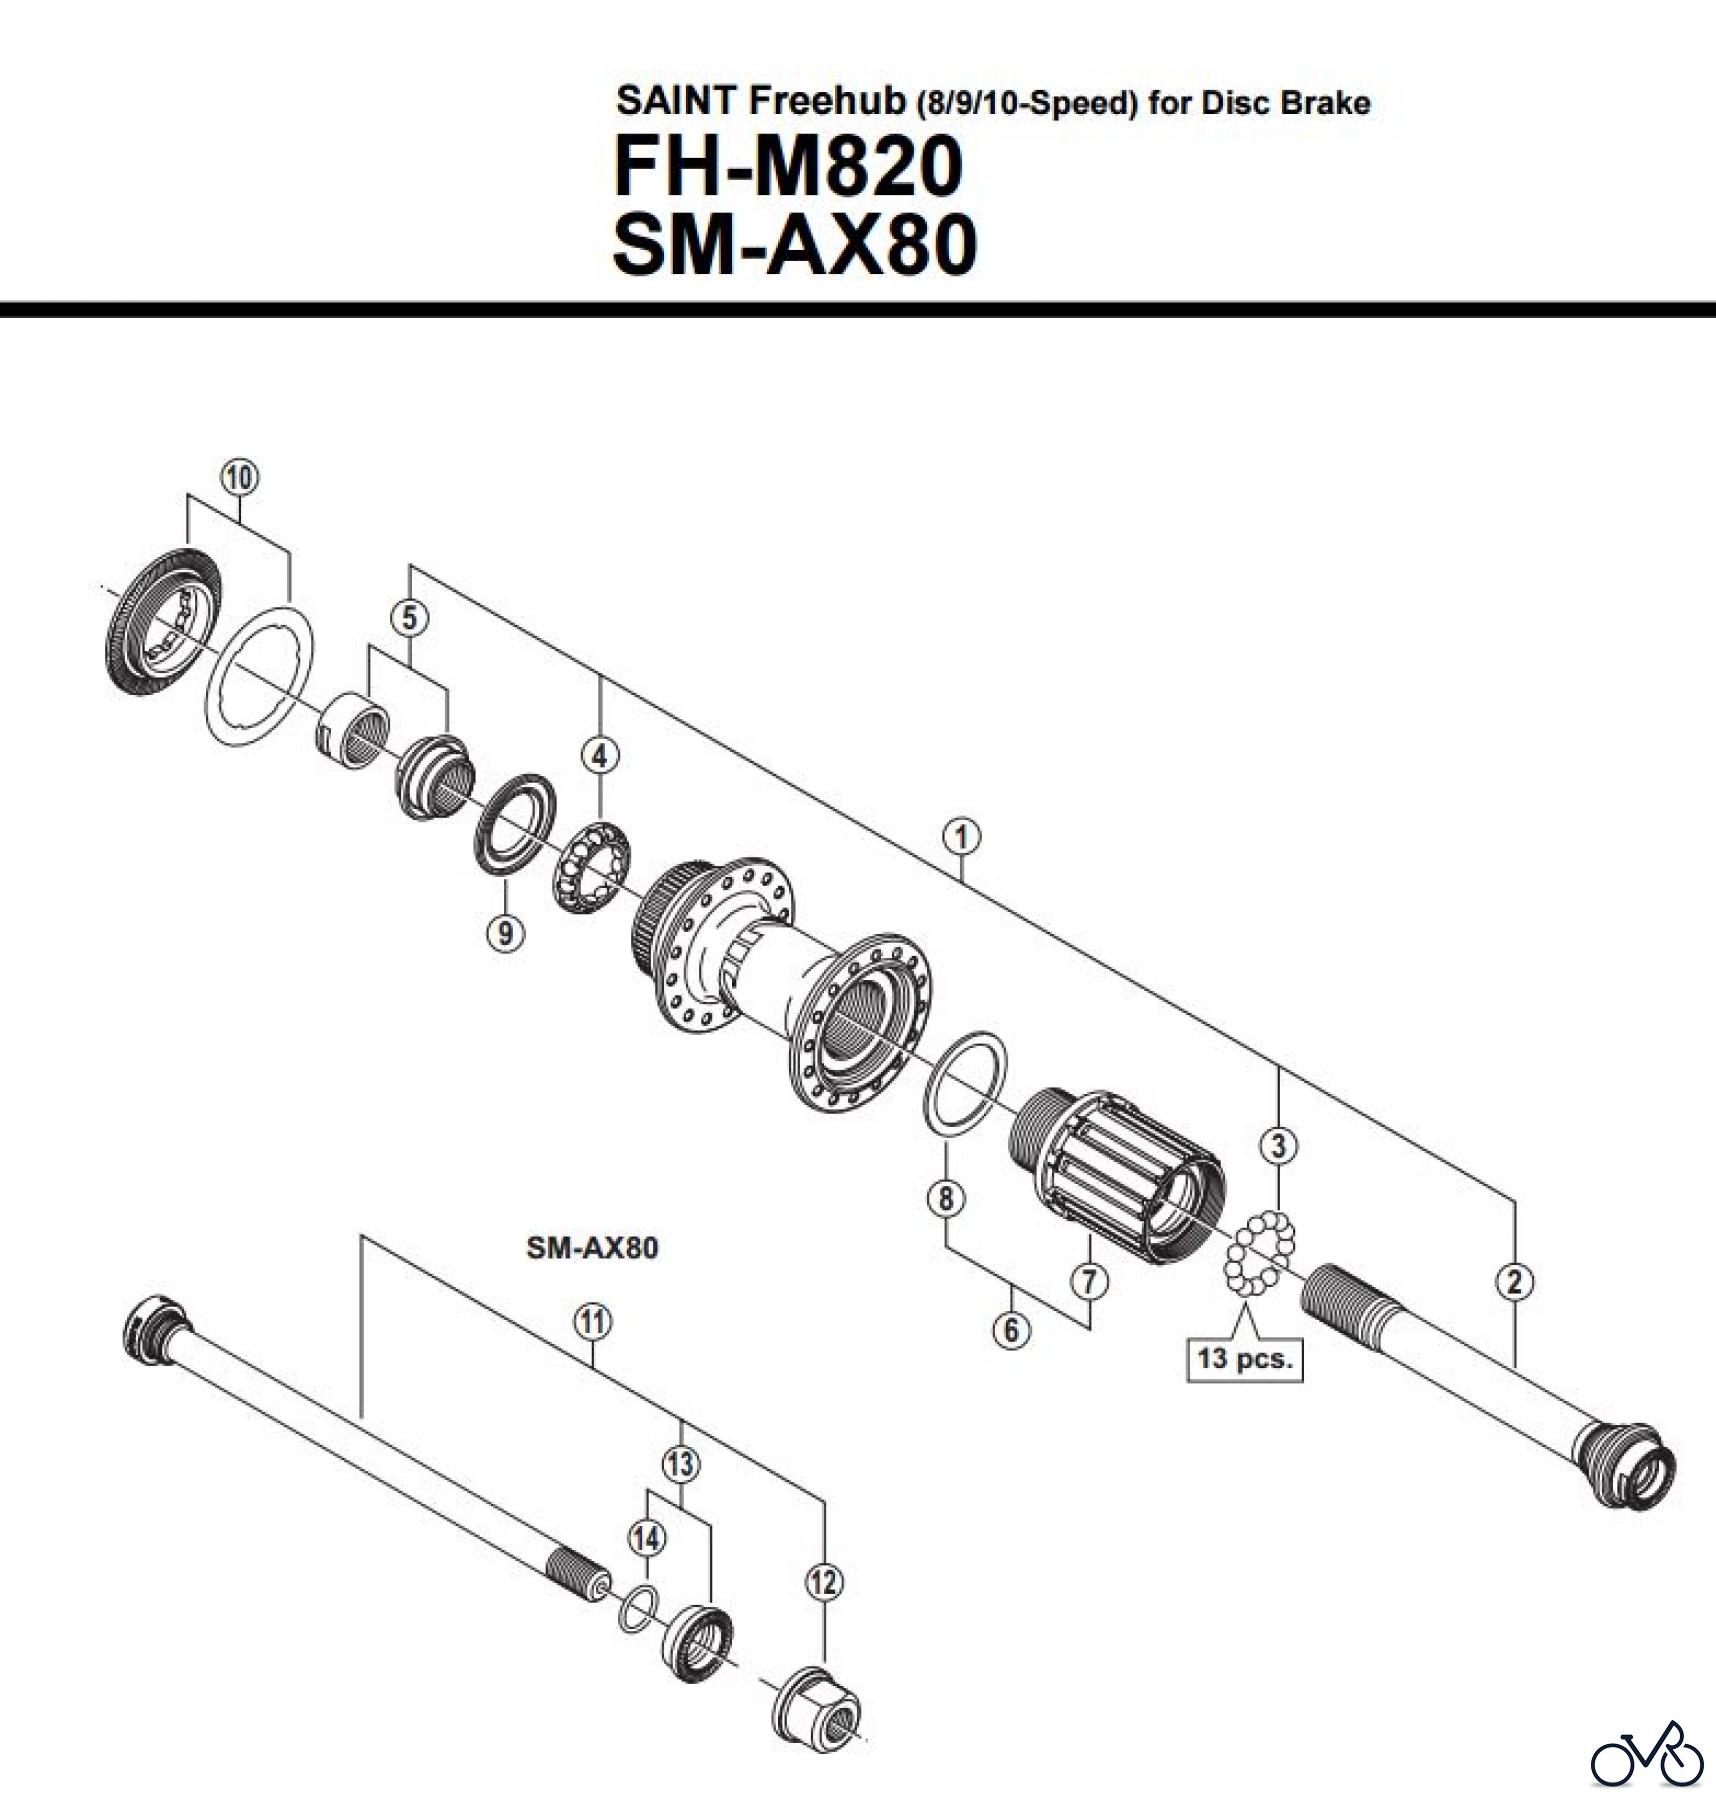  Shimano FH Free Hub - Freilaufnabe FH-M820 SAINT Freehub (8/9/10-Speed) for Disc Brake